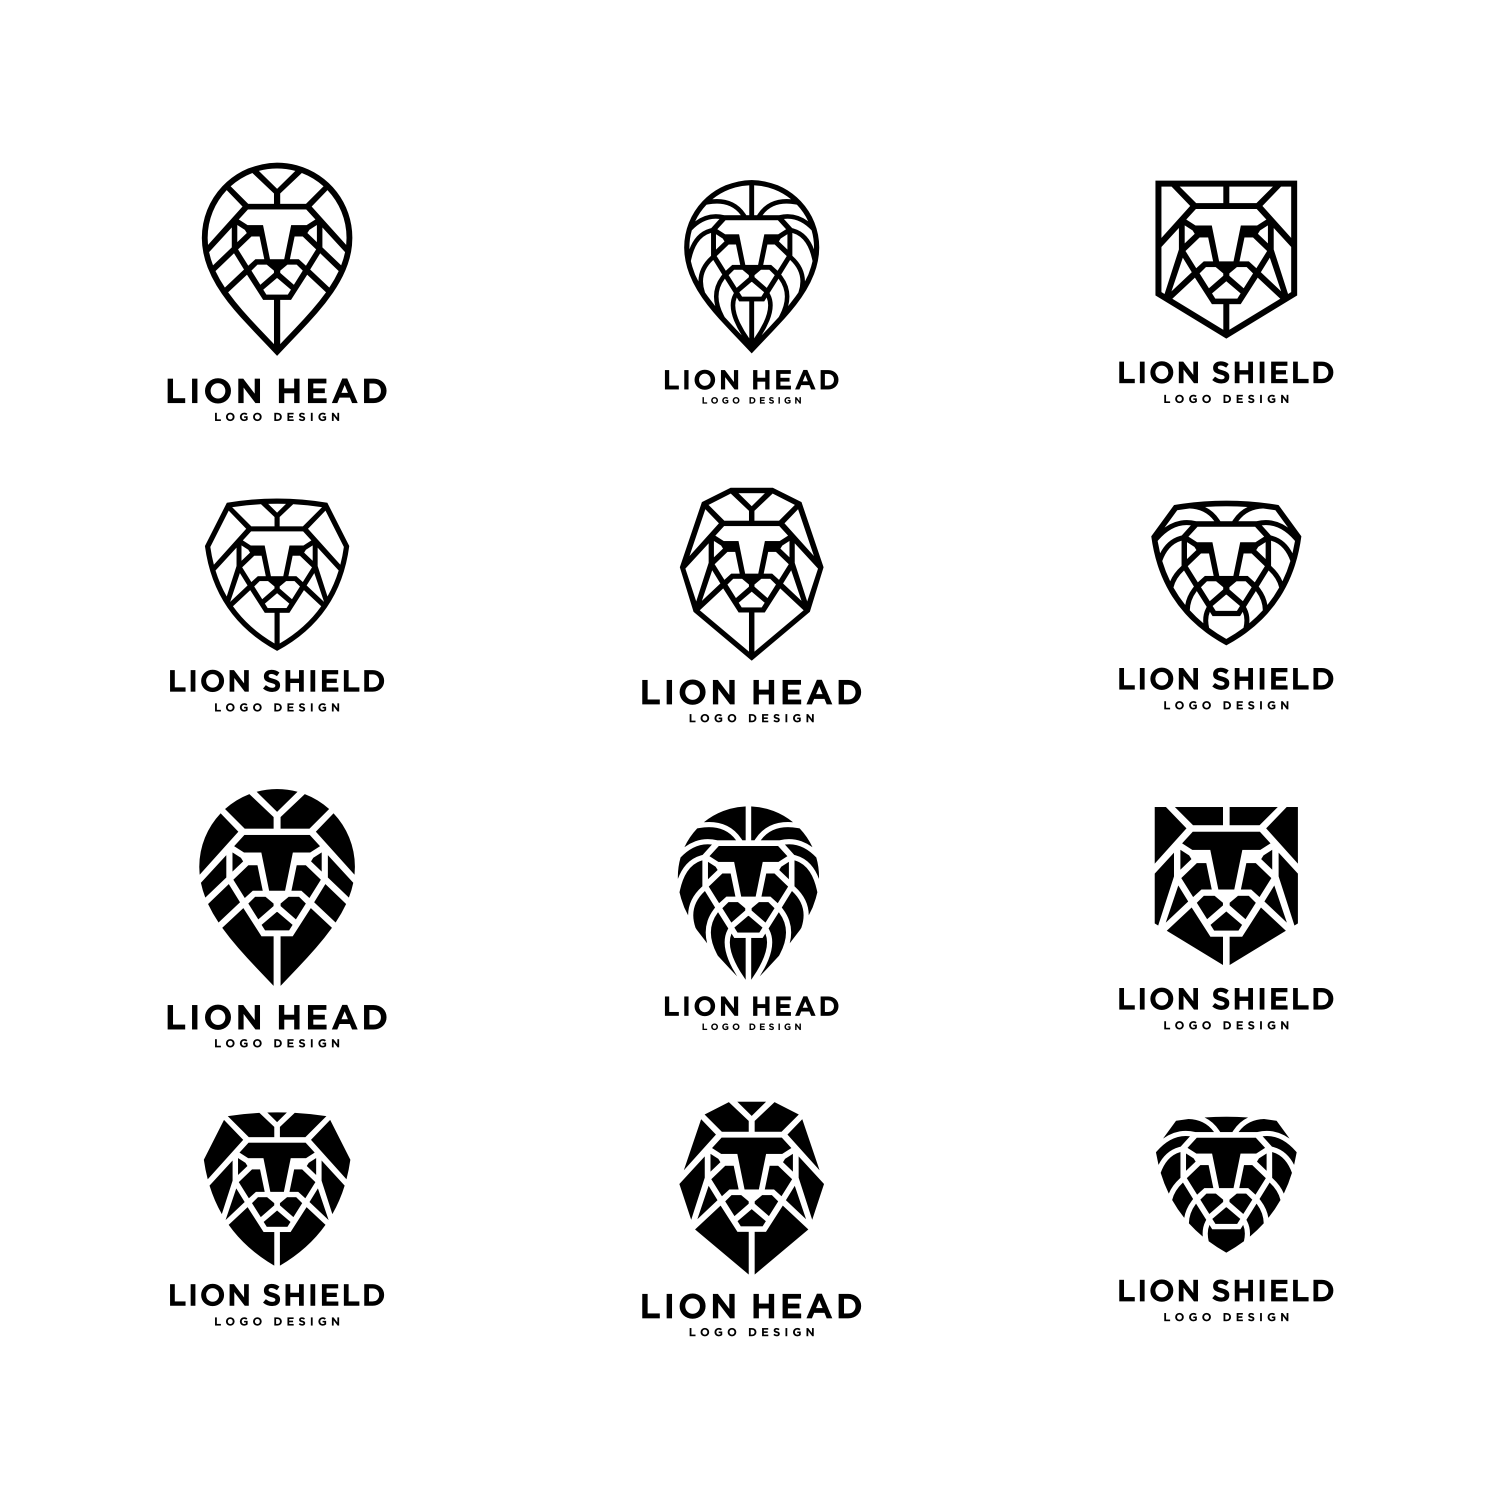 Lion King Shield Logo Vector Design cover image.